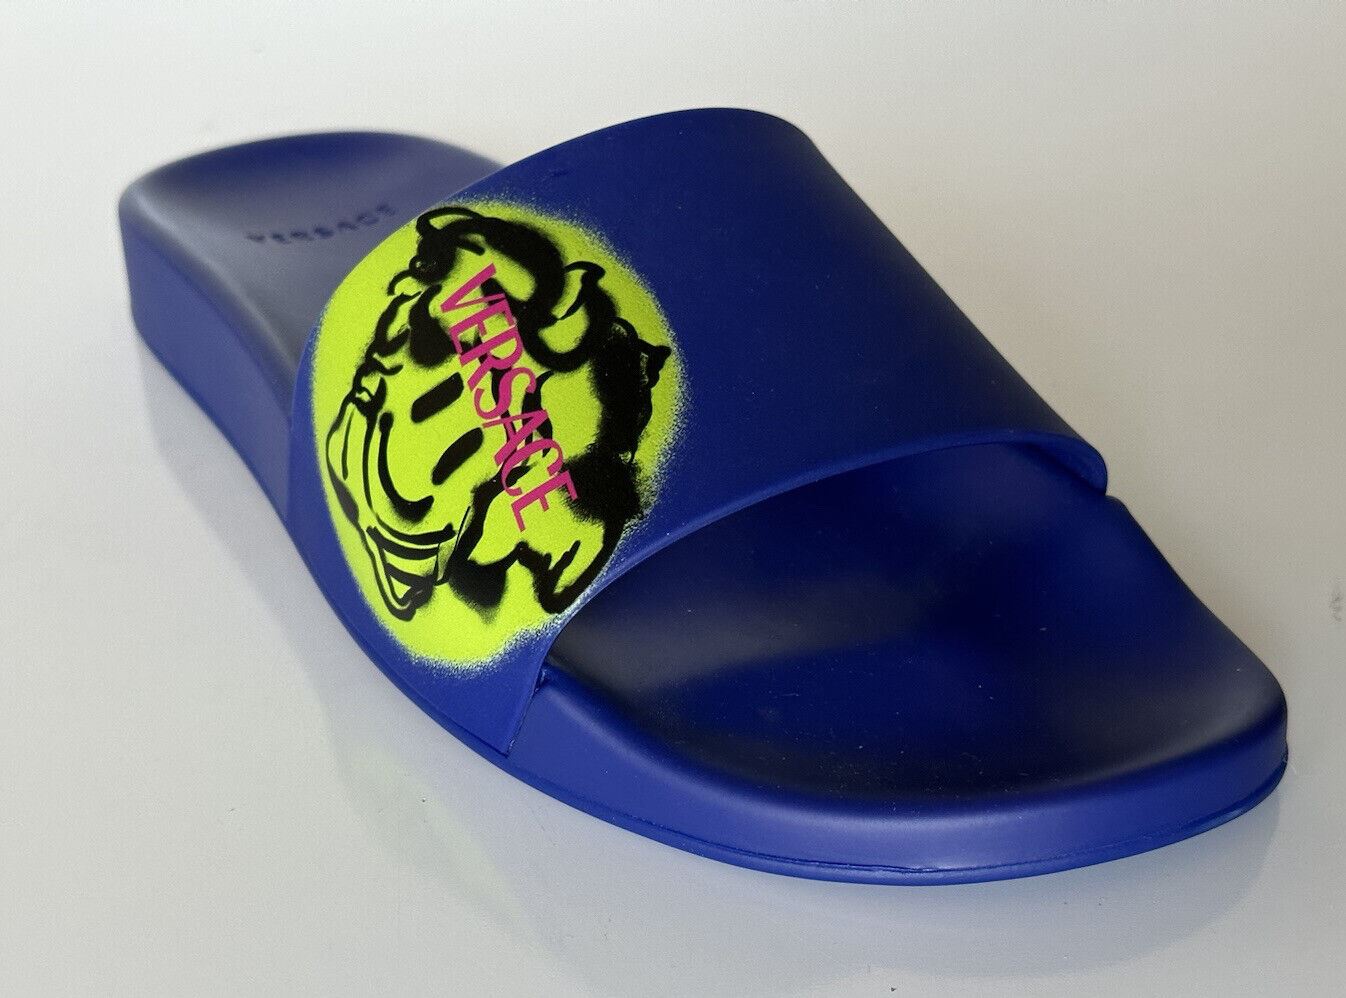 NIB $ 450 Versace Smiley Medusa Slides Sandalen Blau/Limette 13 US (46 Eu) DSU6516 IT 